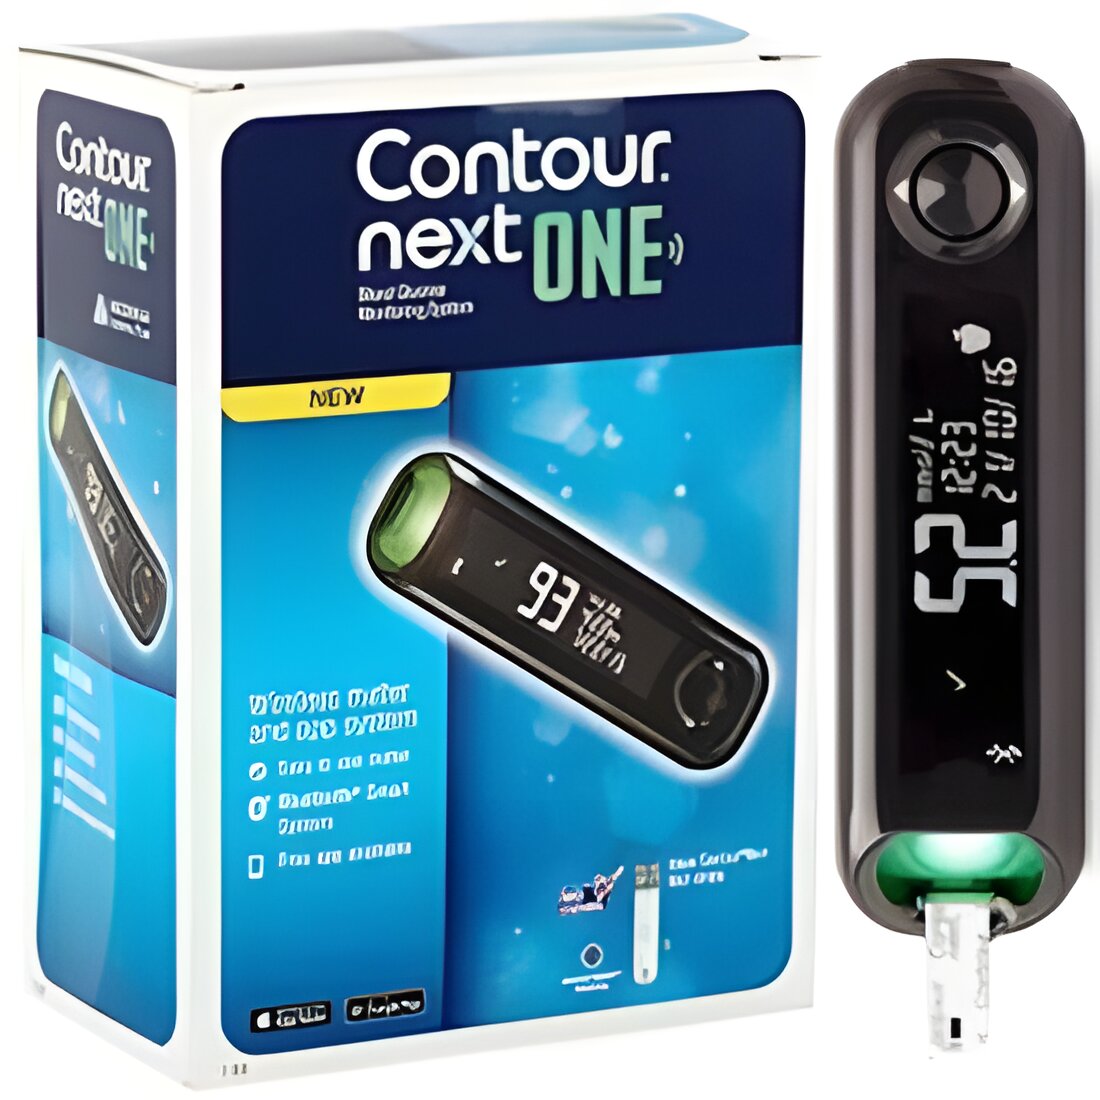 Free Contour Next One Glucose Meter